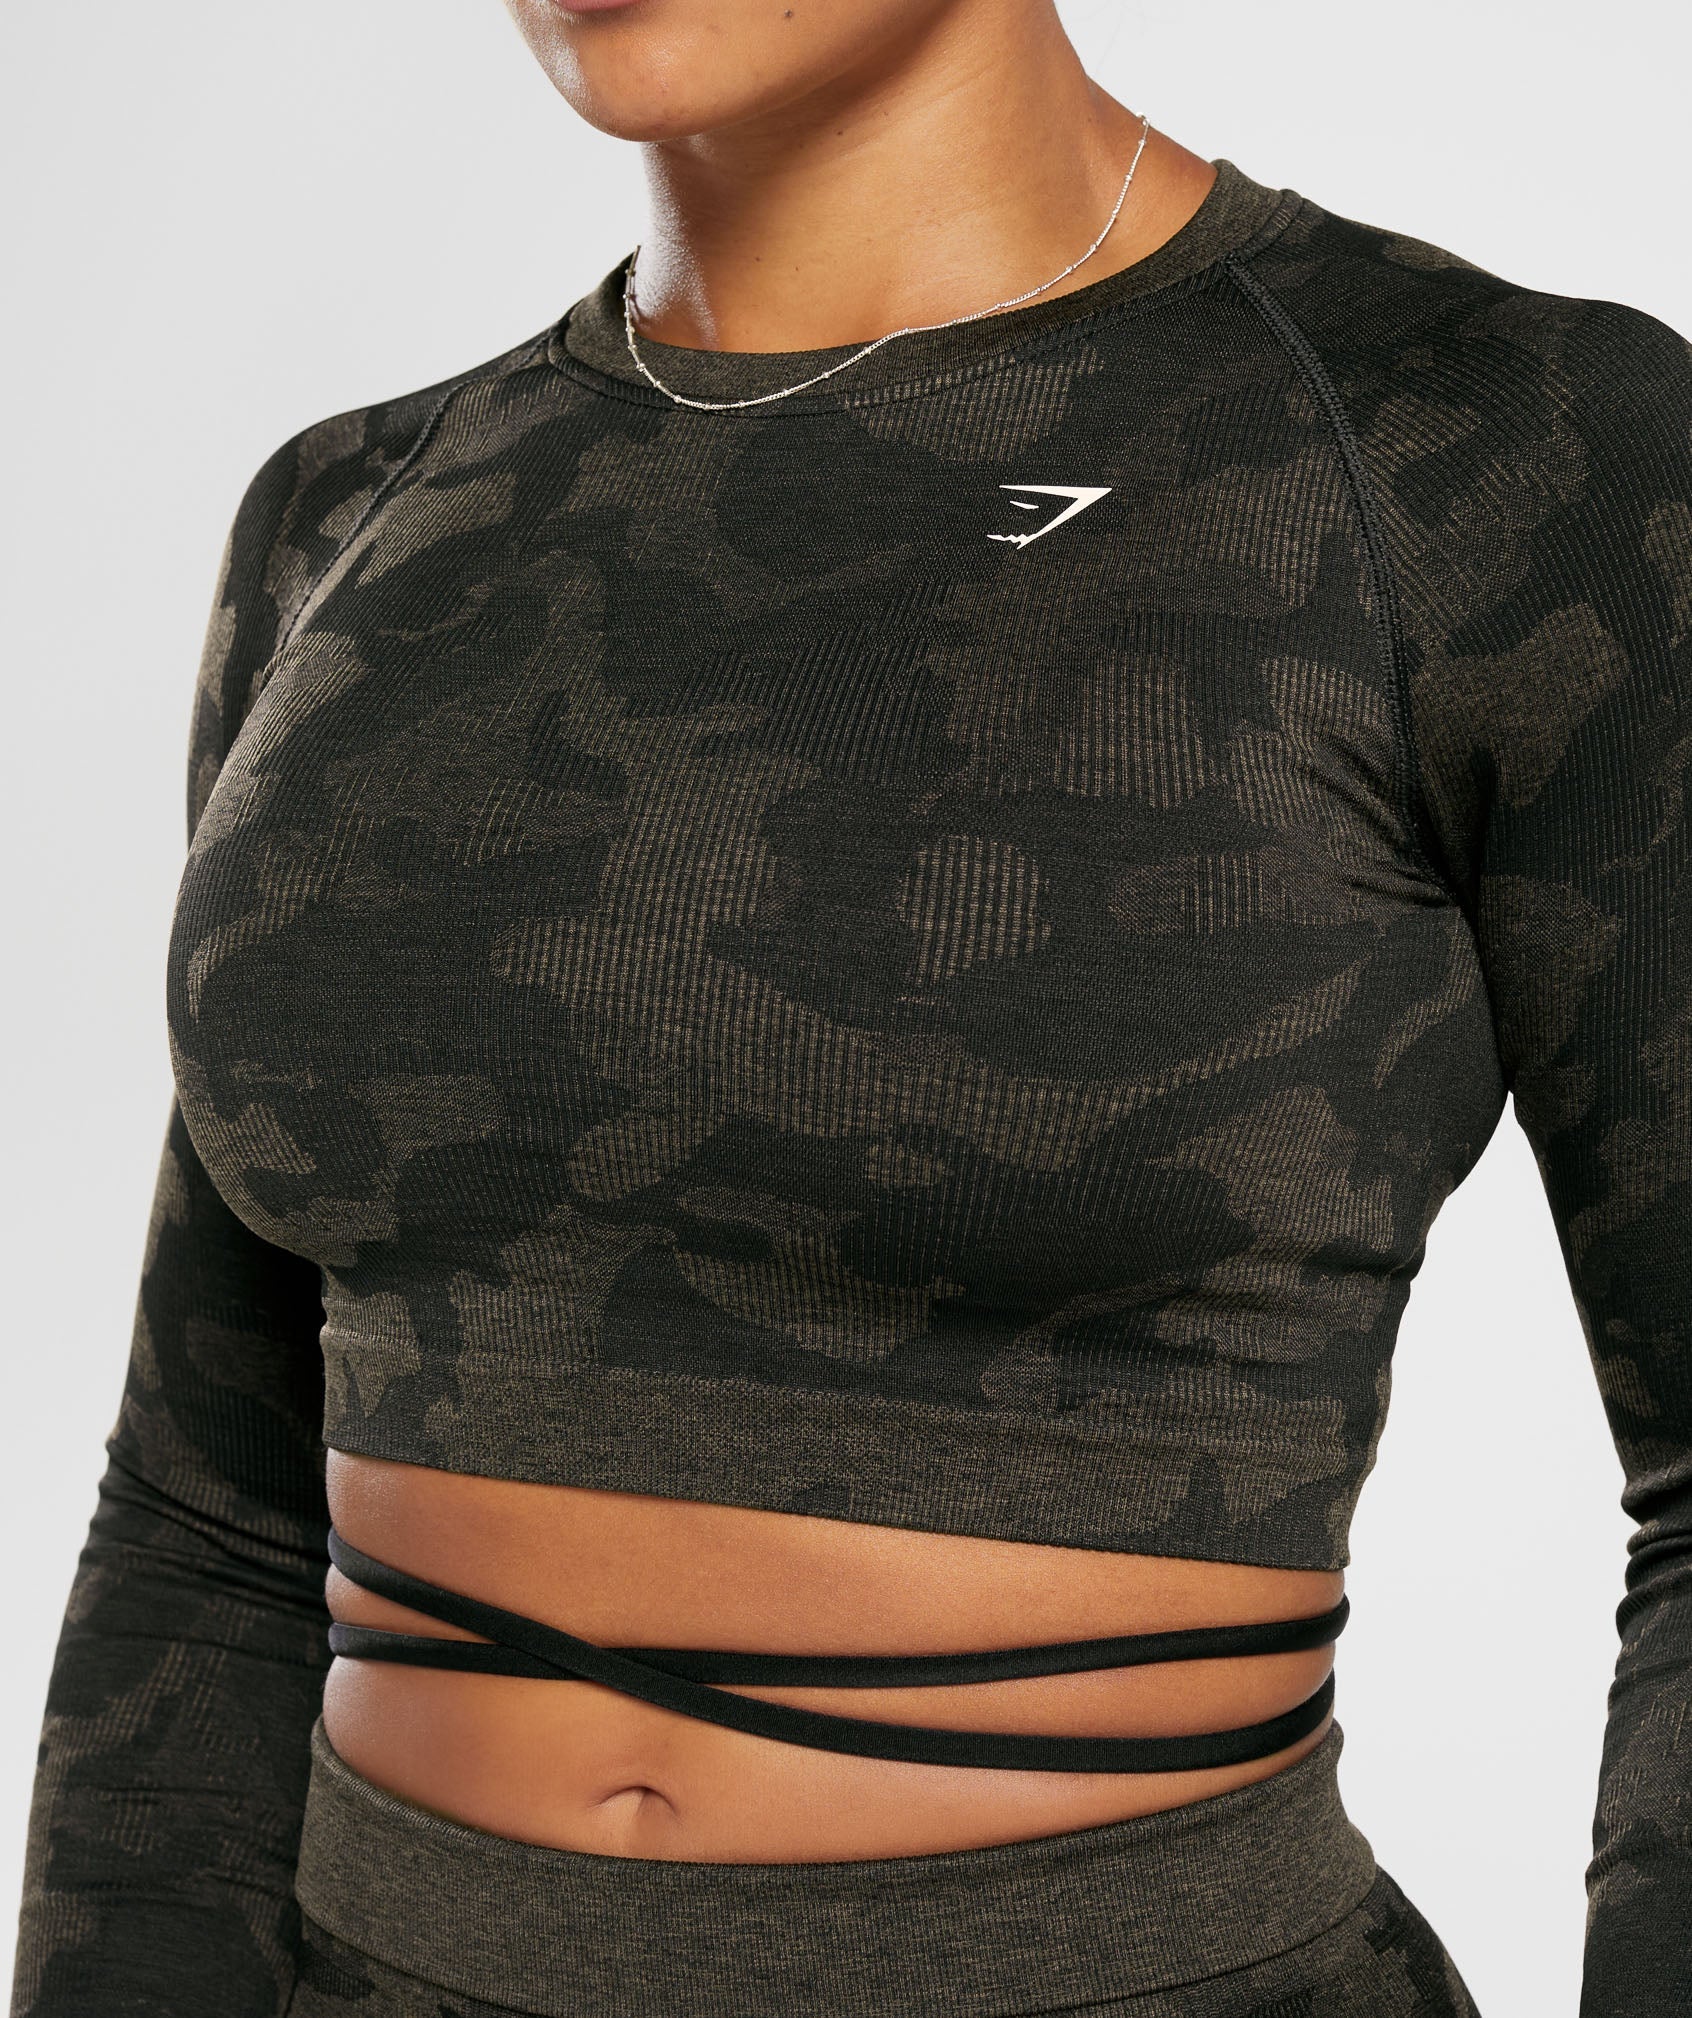 Women's Workout Clothes & Gym Wear Online - Ape-X Apparel